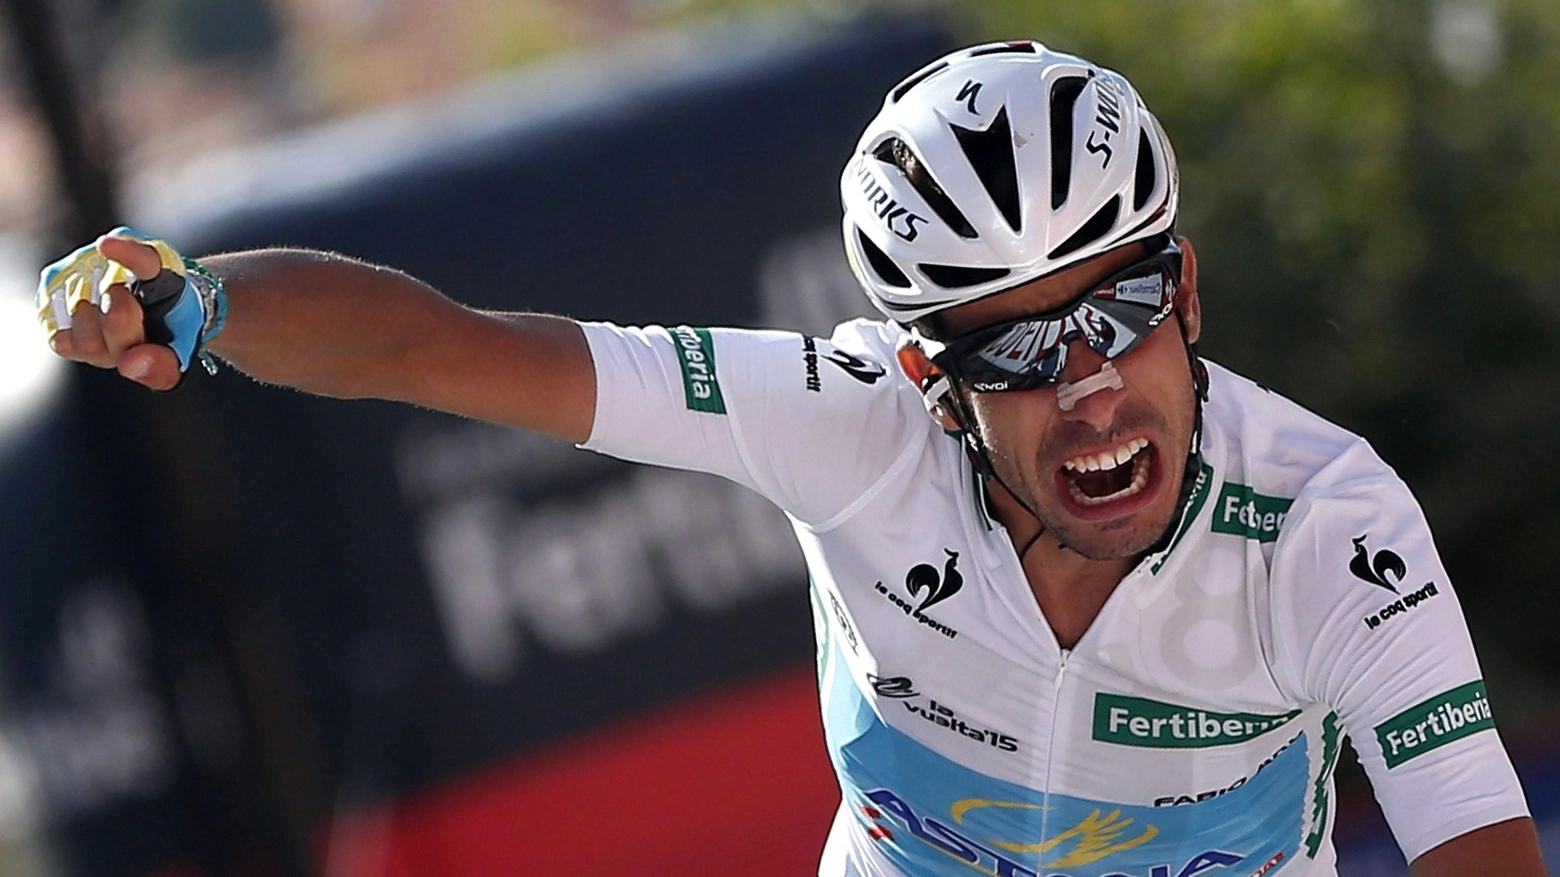 La grinta di Aru alla Vuelta, vinta del 2015 (Ansa)